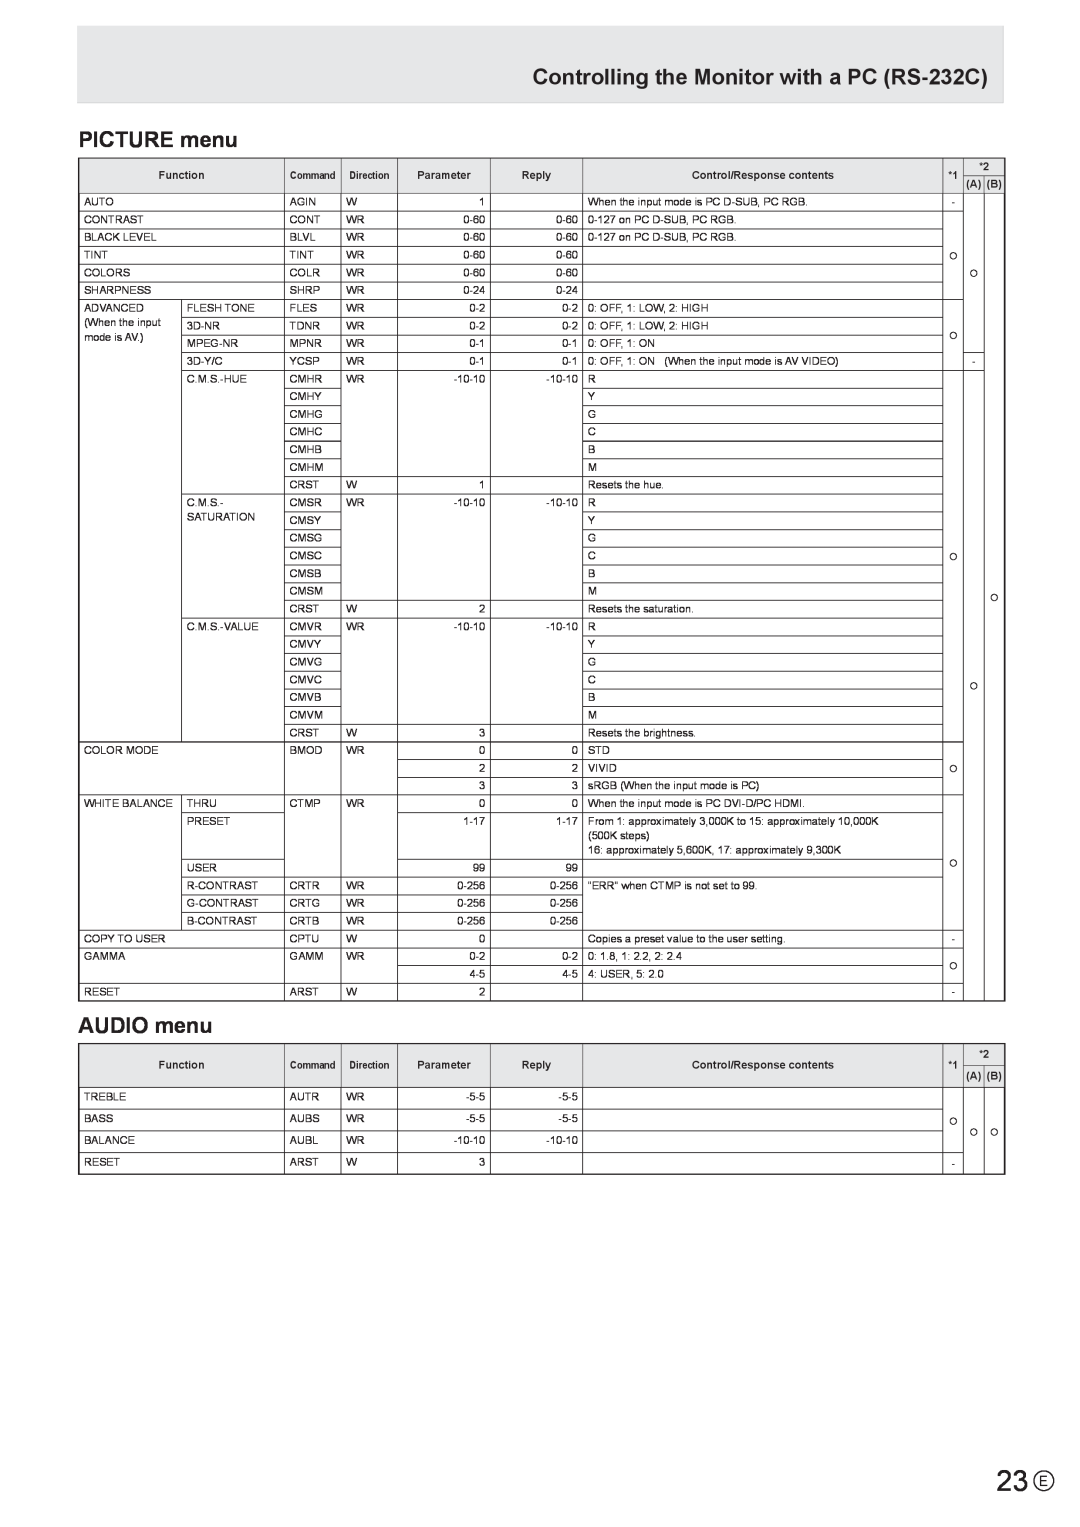 Sharp PN-E521, PN-E601 manual 23 E, Controlling the Monitor with a PC RS-232C PICTURE menu, AUDIO menu 